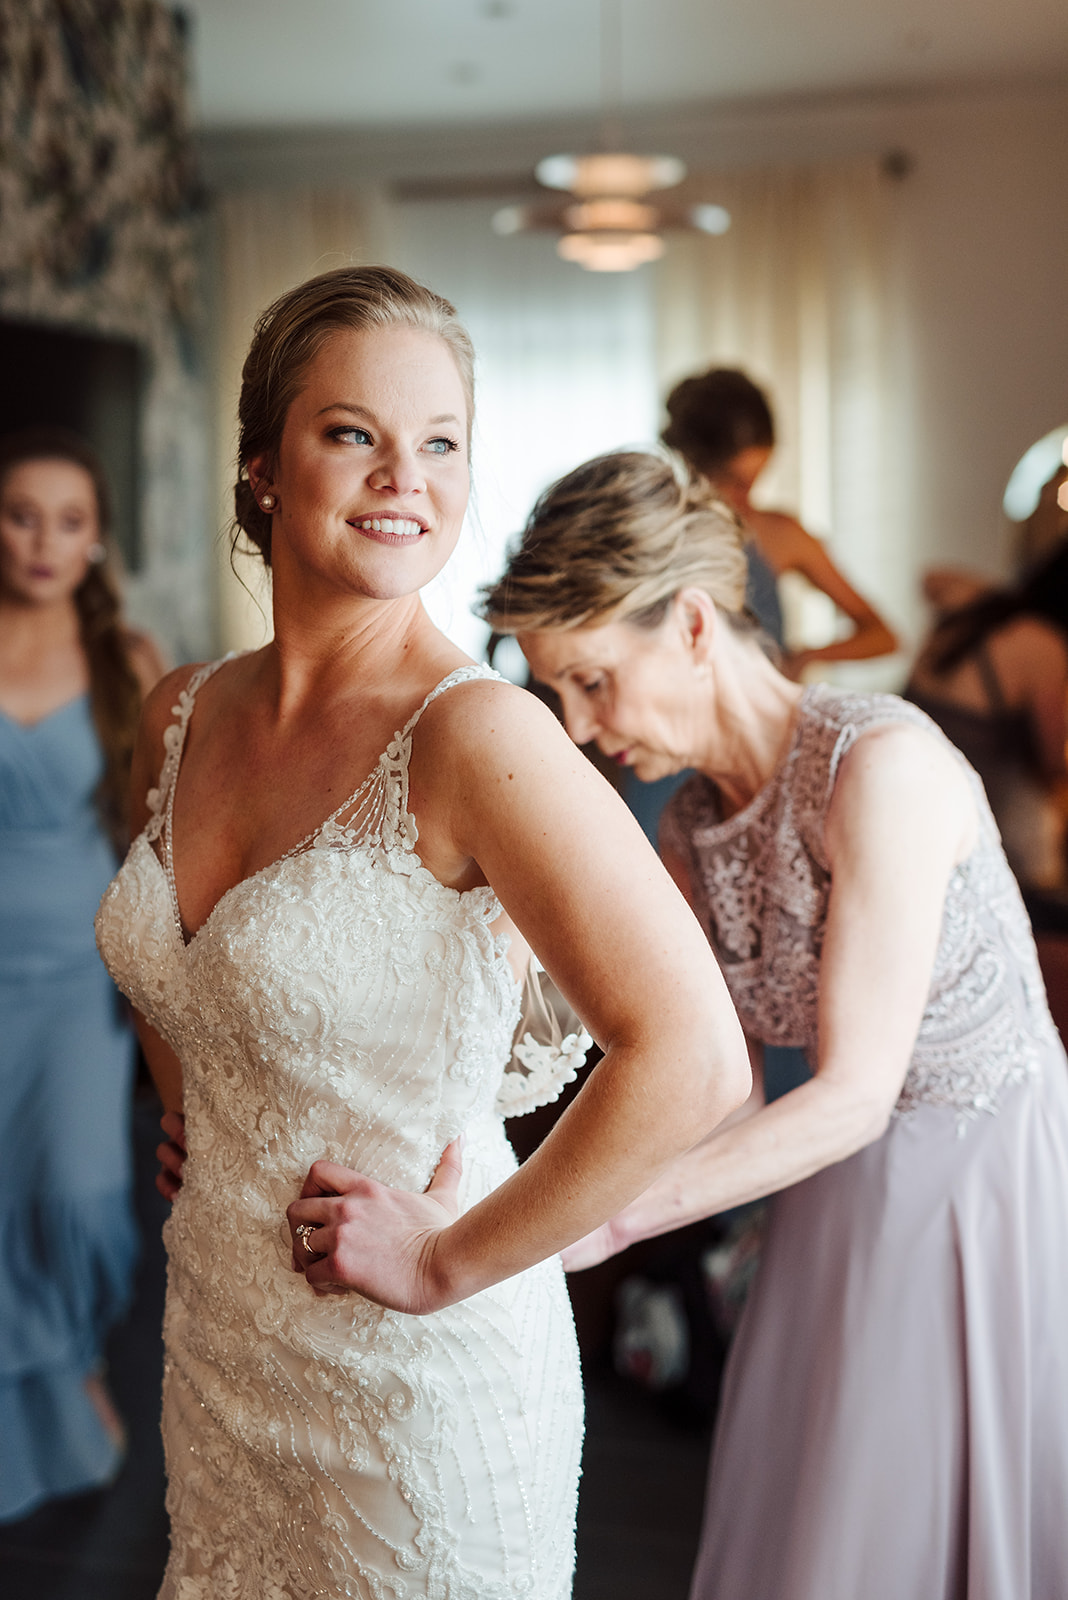 Bridal dress: Nashville wedding at Clementine featured on Nashville Bride Guide